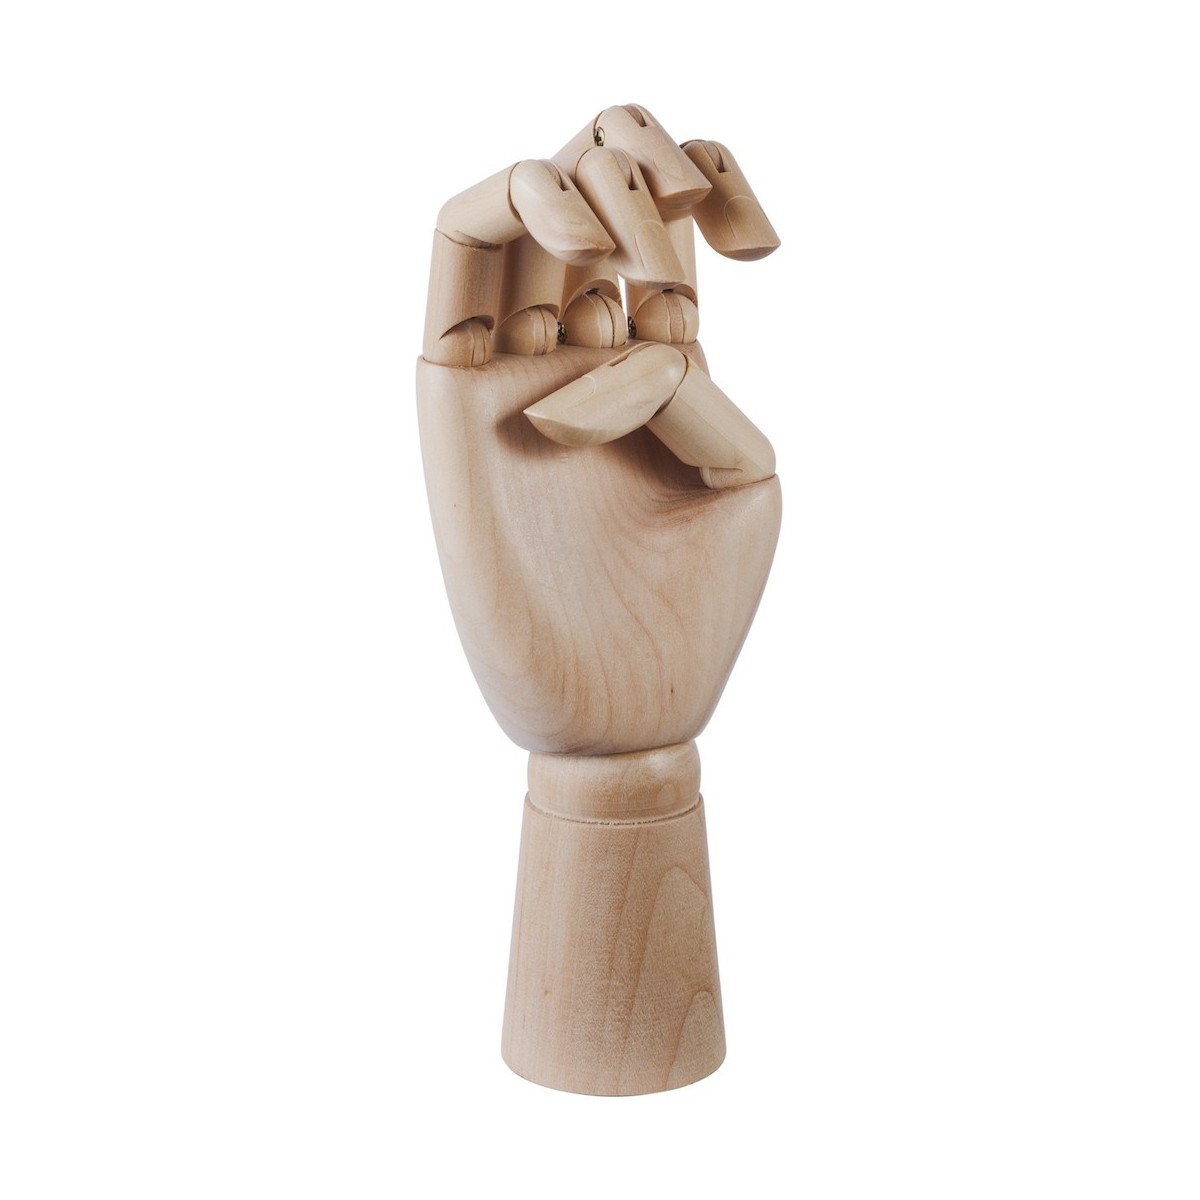 L - wooden hand